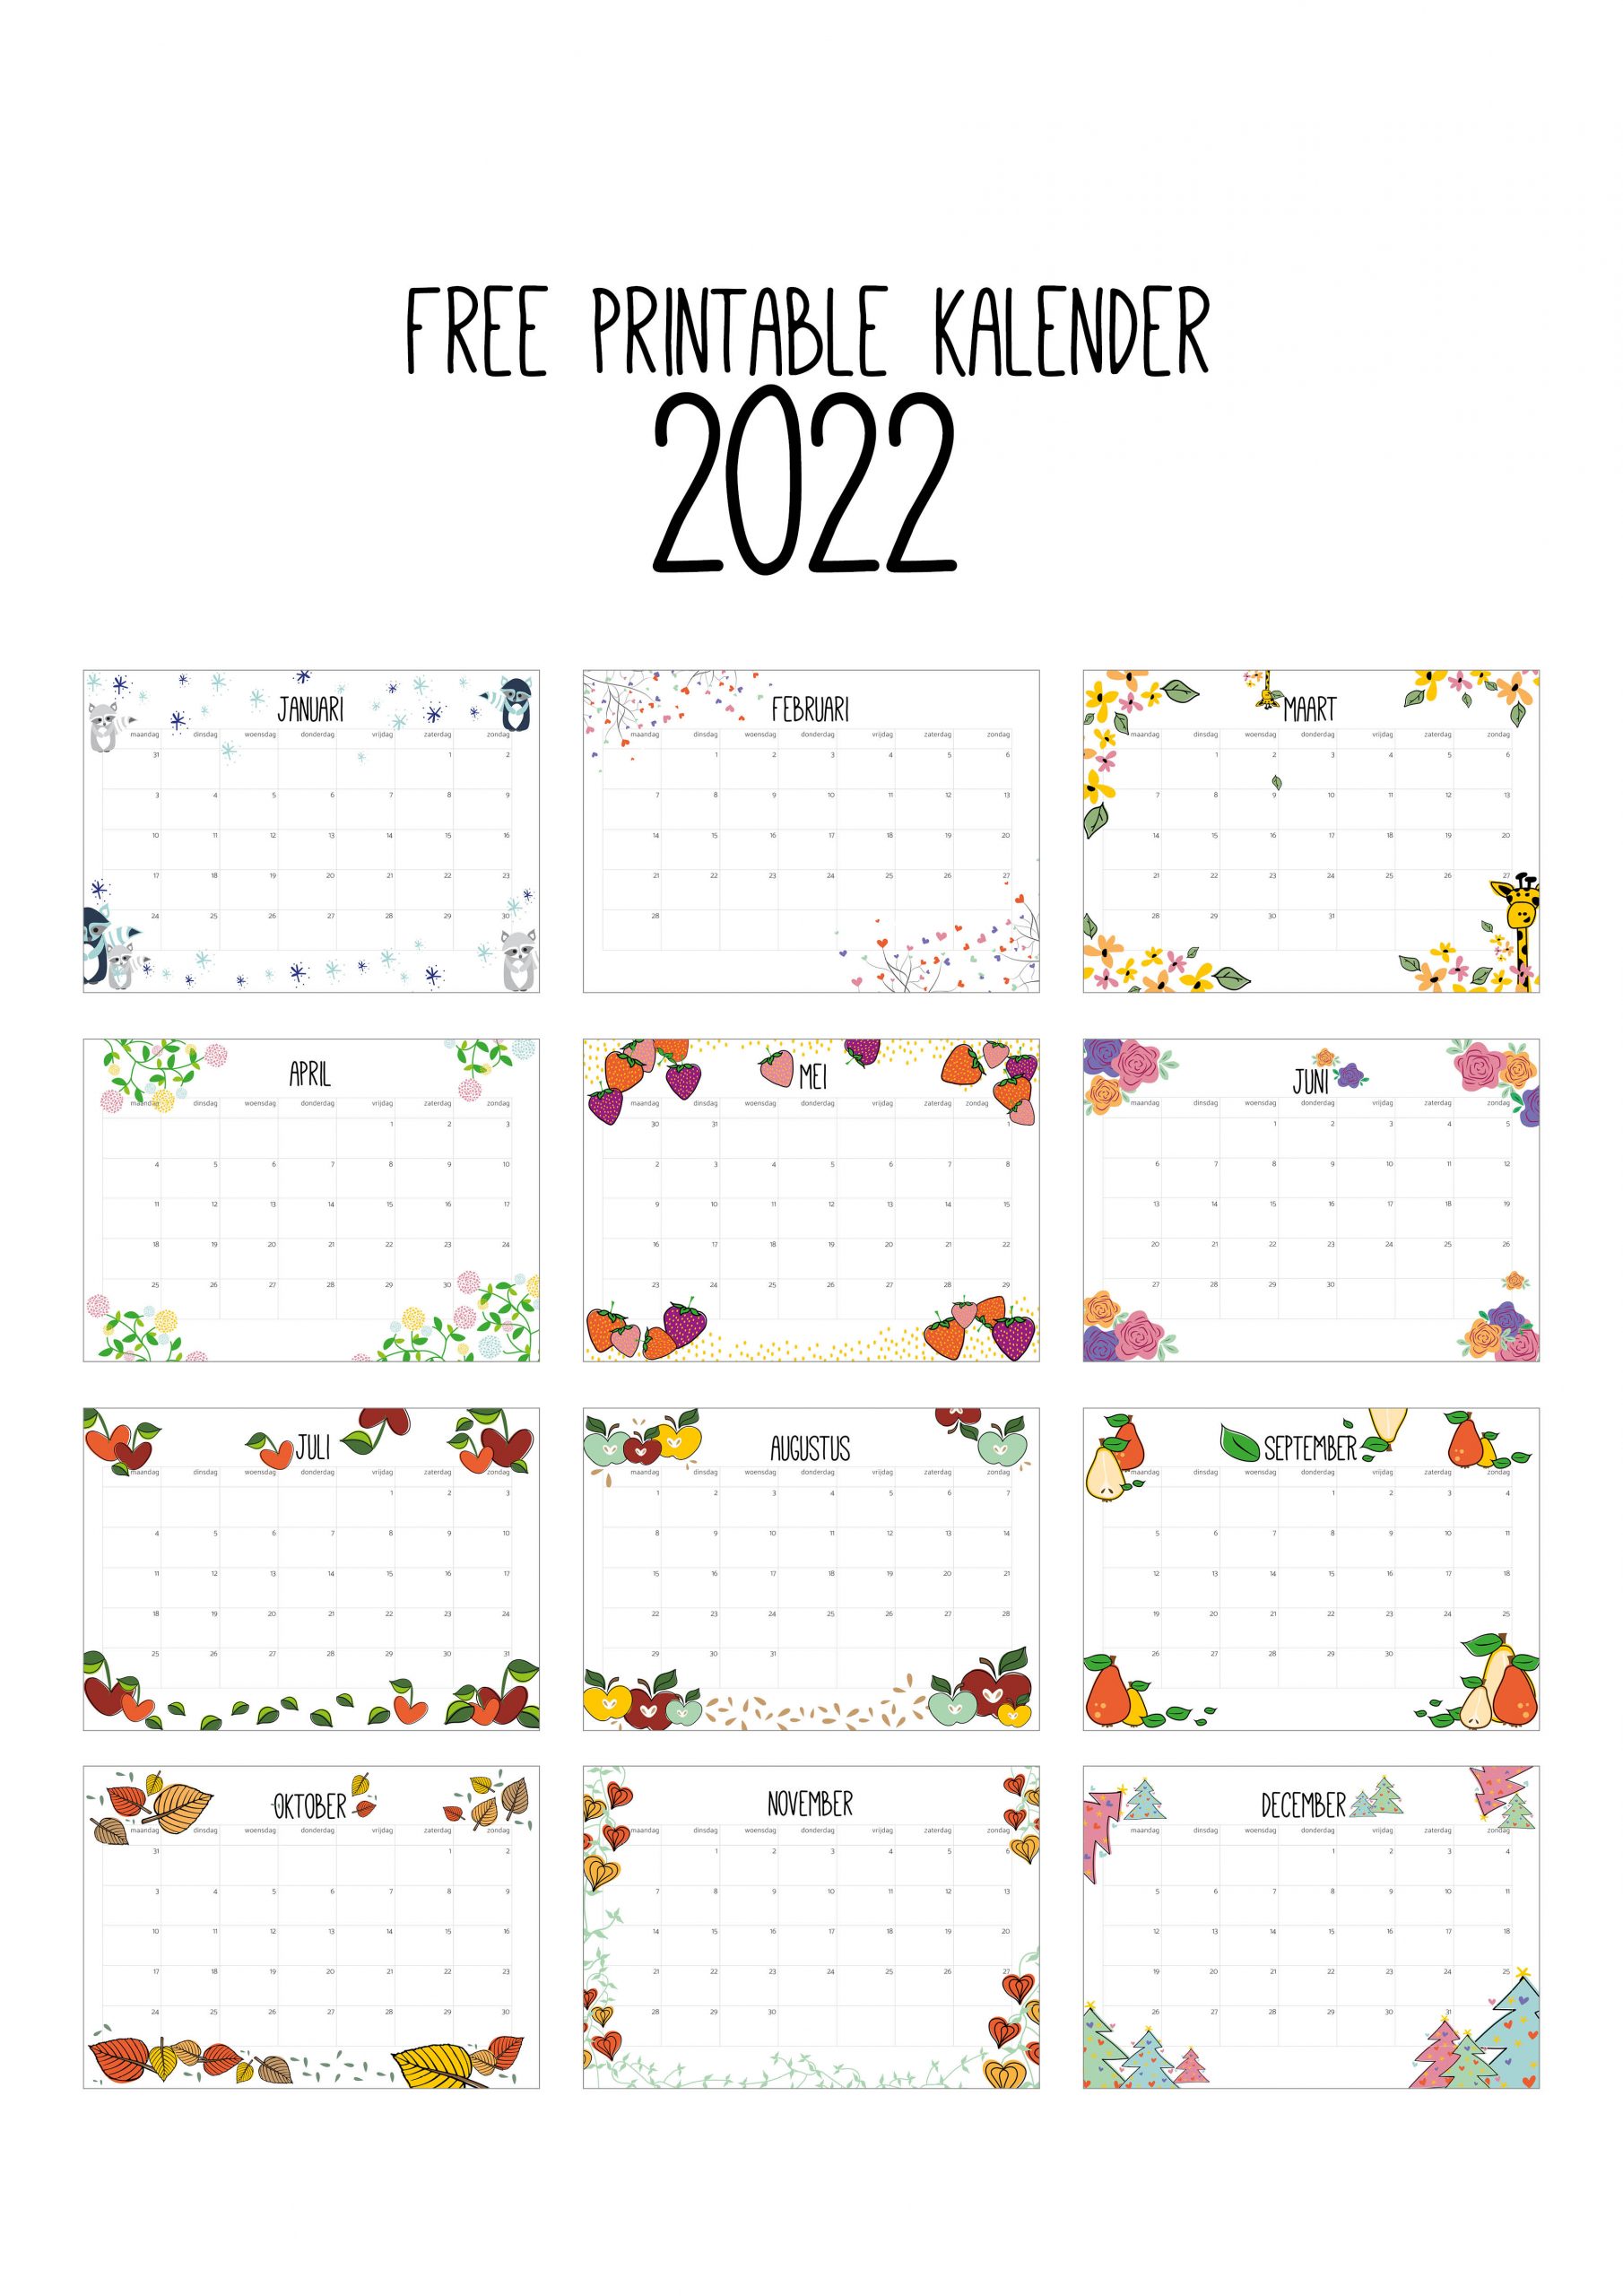 agentschap idioom mythologie Free Printable kalender 2022 - Hip & Hot - blogazine